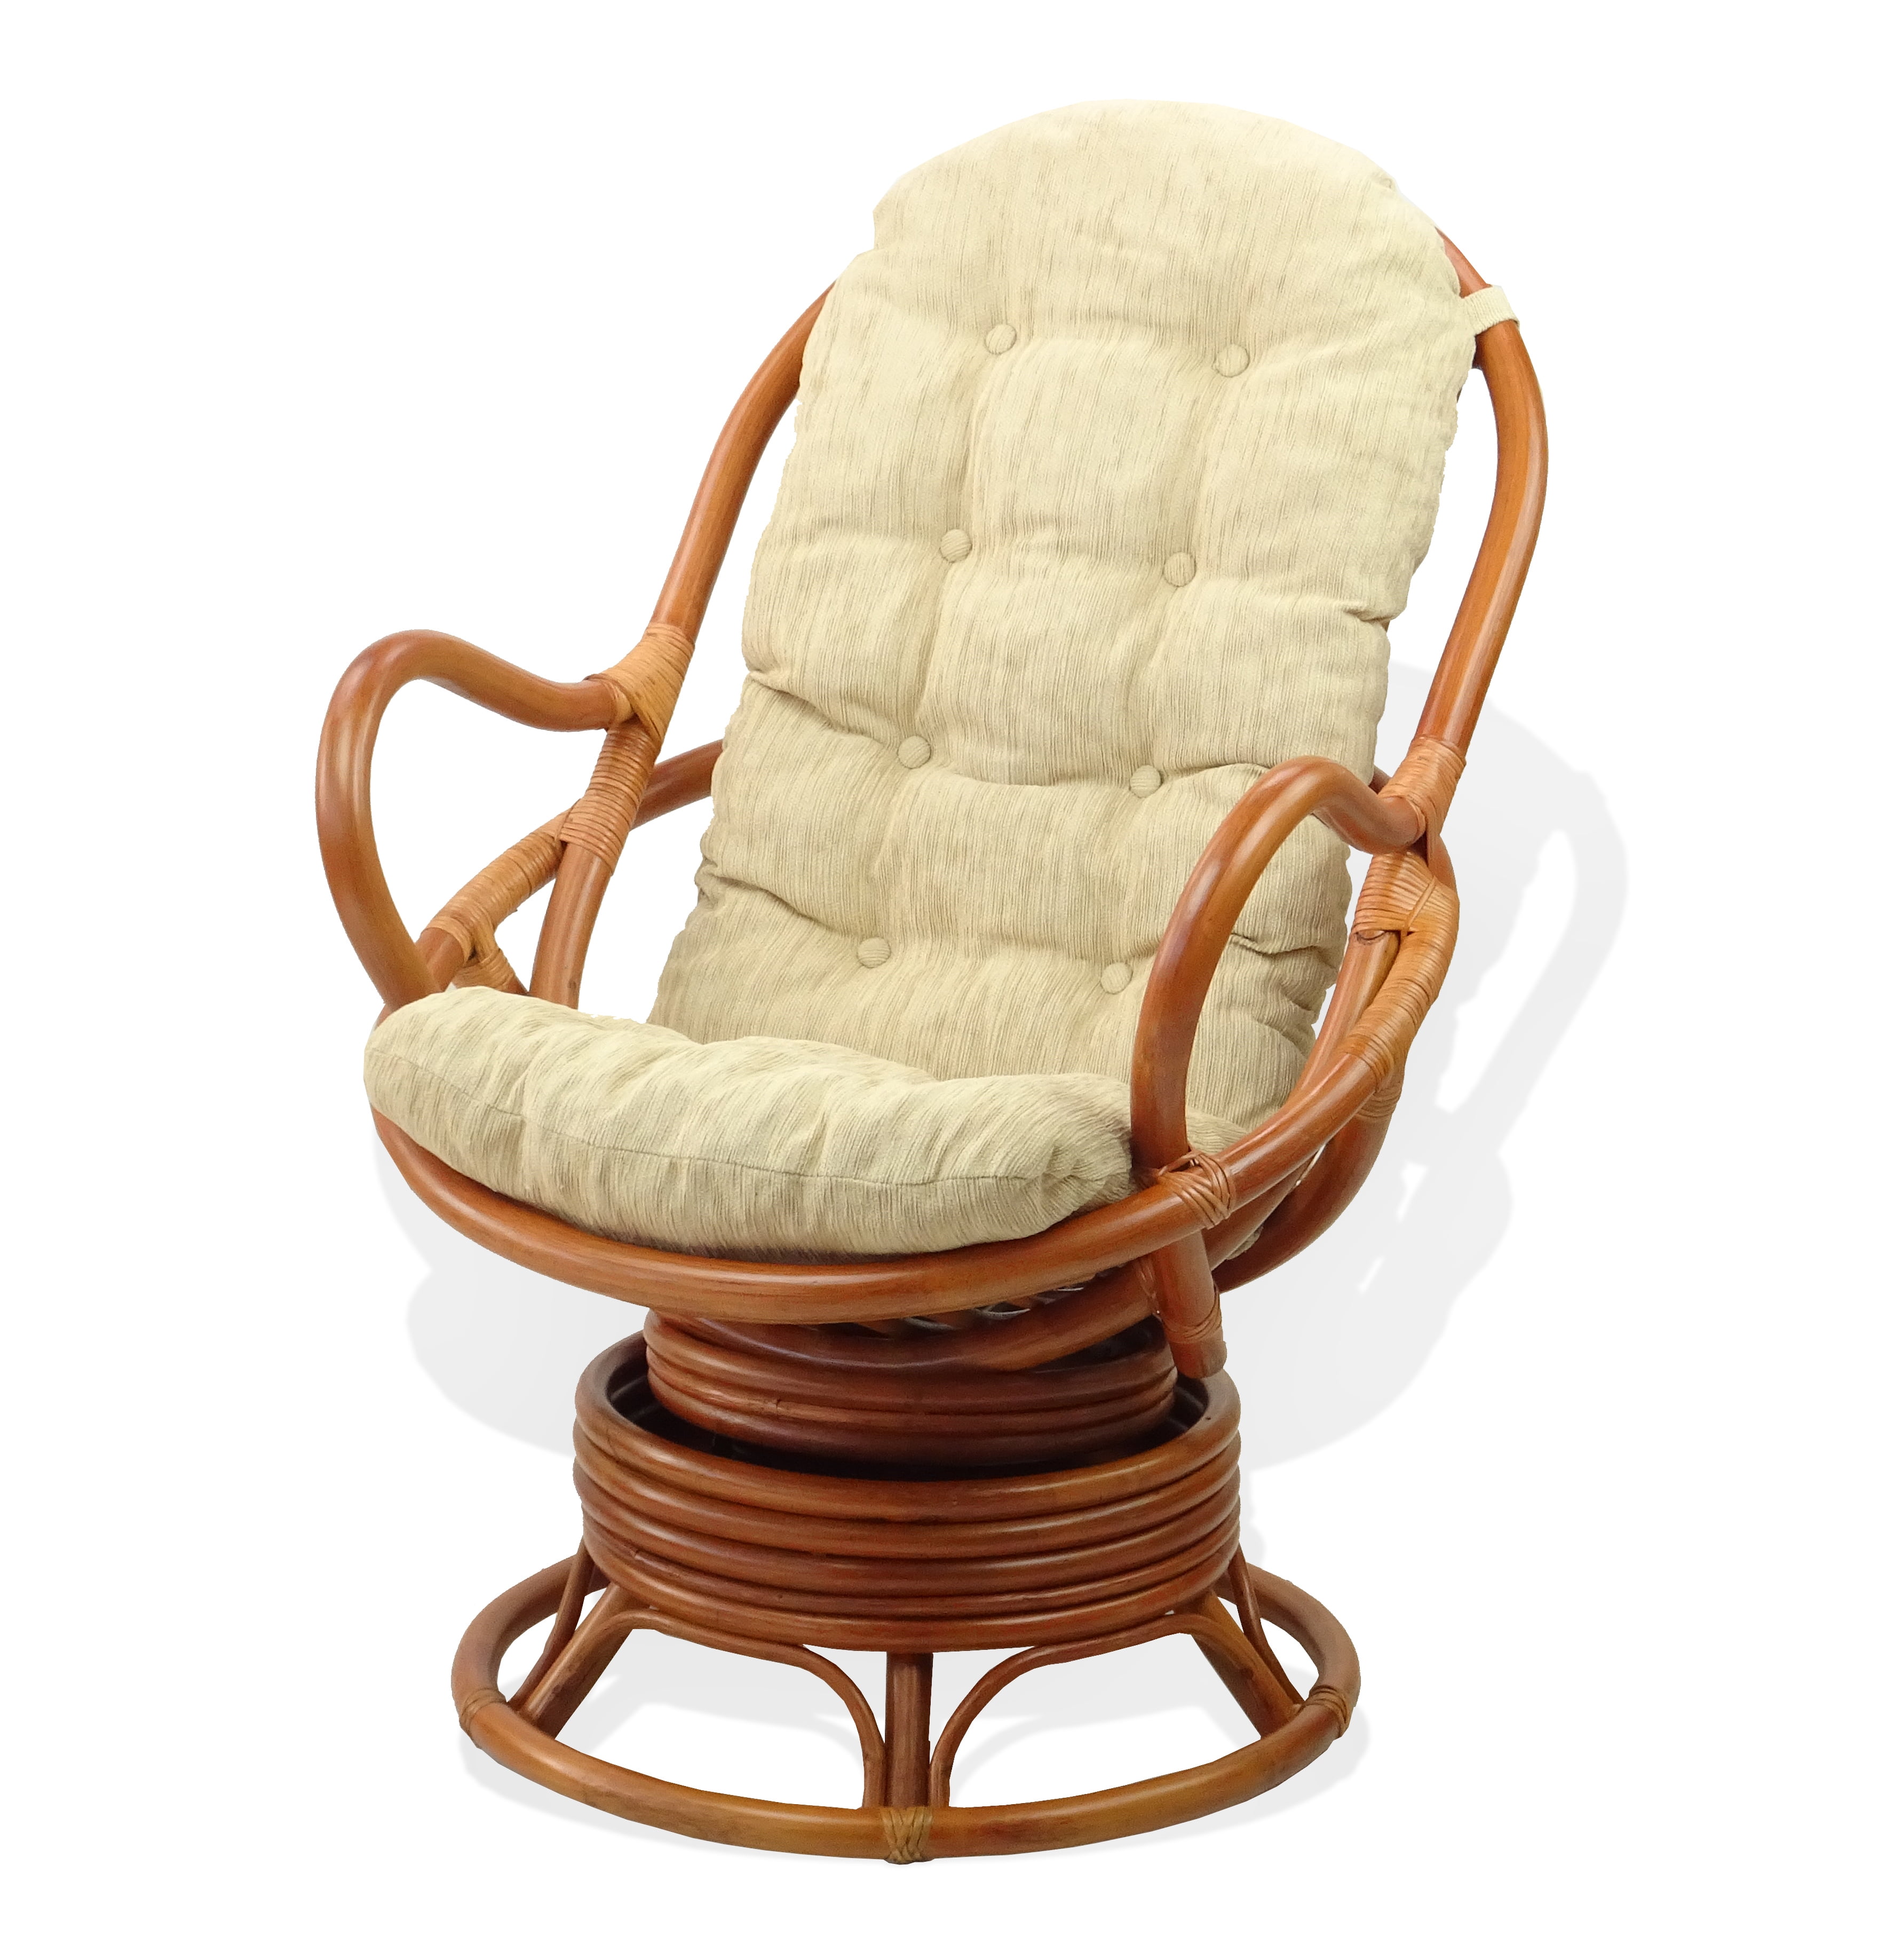 Java Handmade Design Rattan Wicker Swivel Rocking Chair with Cushion 